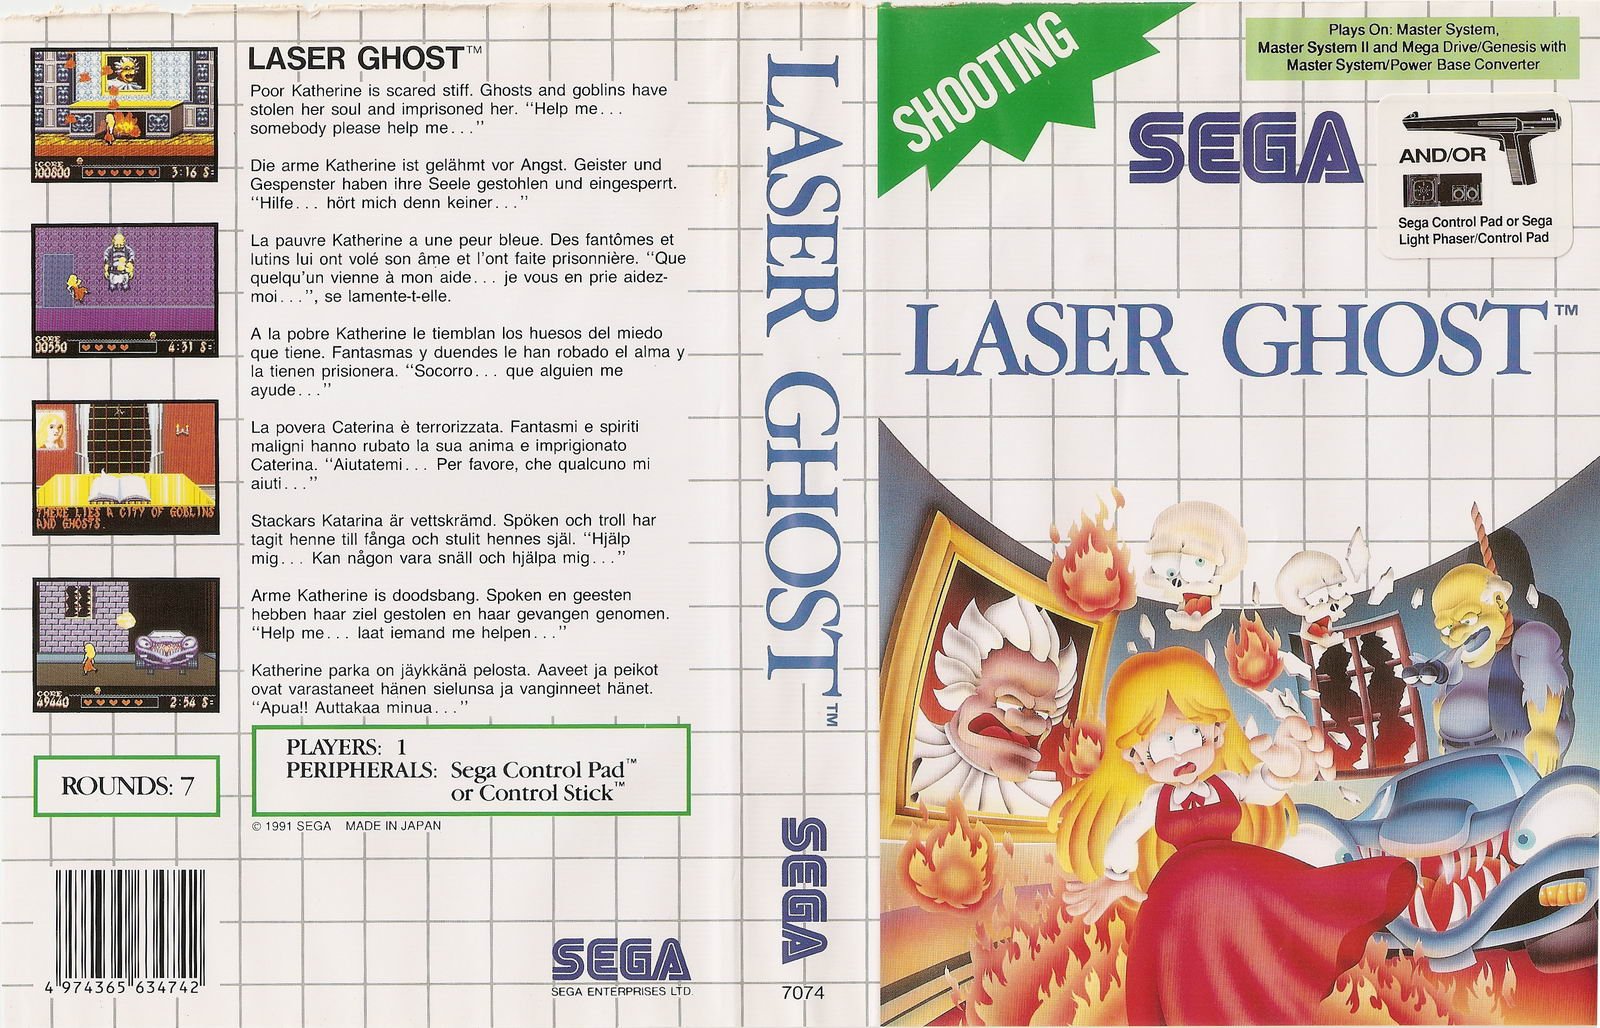 Caratula de Laser Ghost para Sega Master System